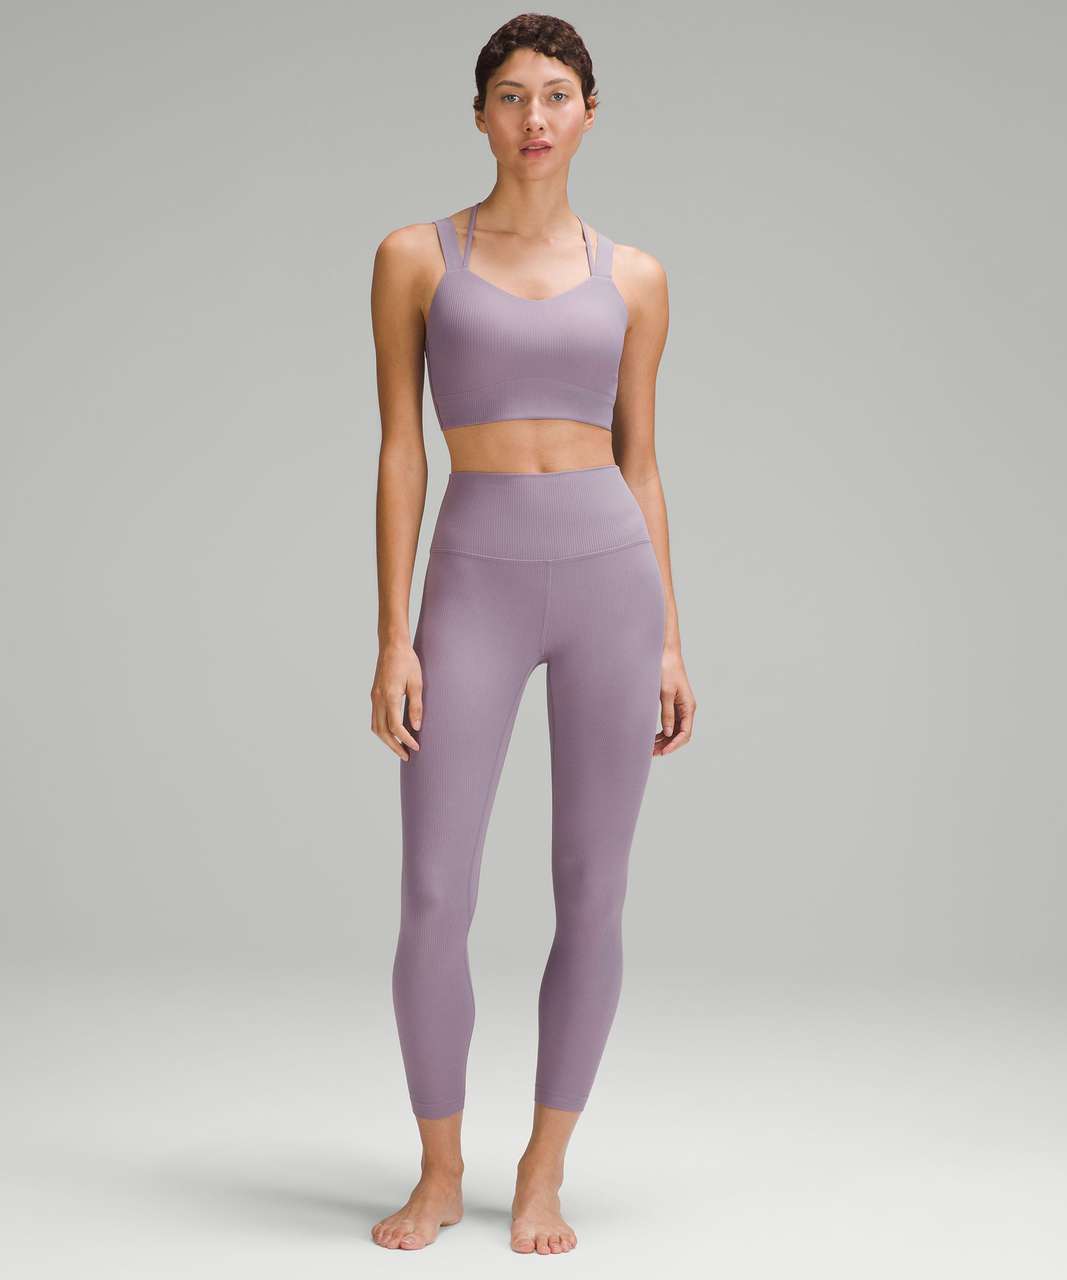 Best Lulu Align Yoga Pants 25′ ′ Inseam High Waist Women